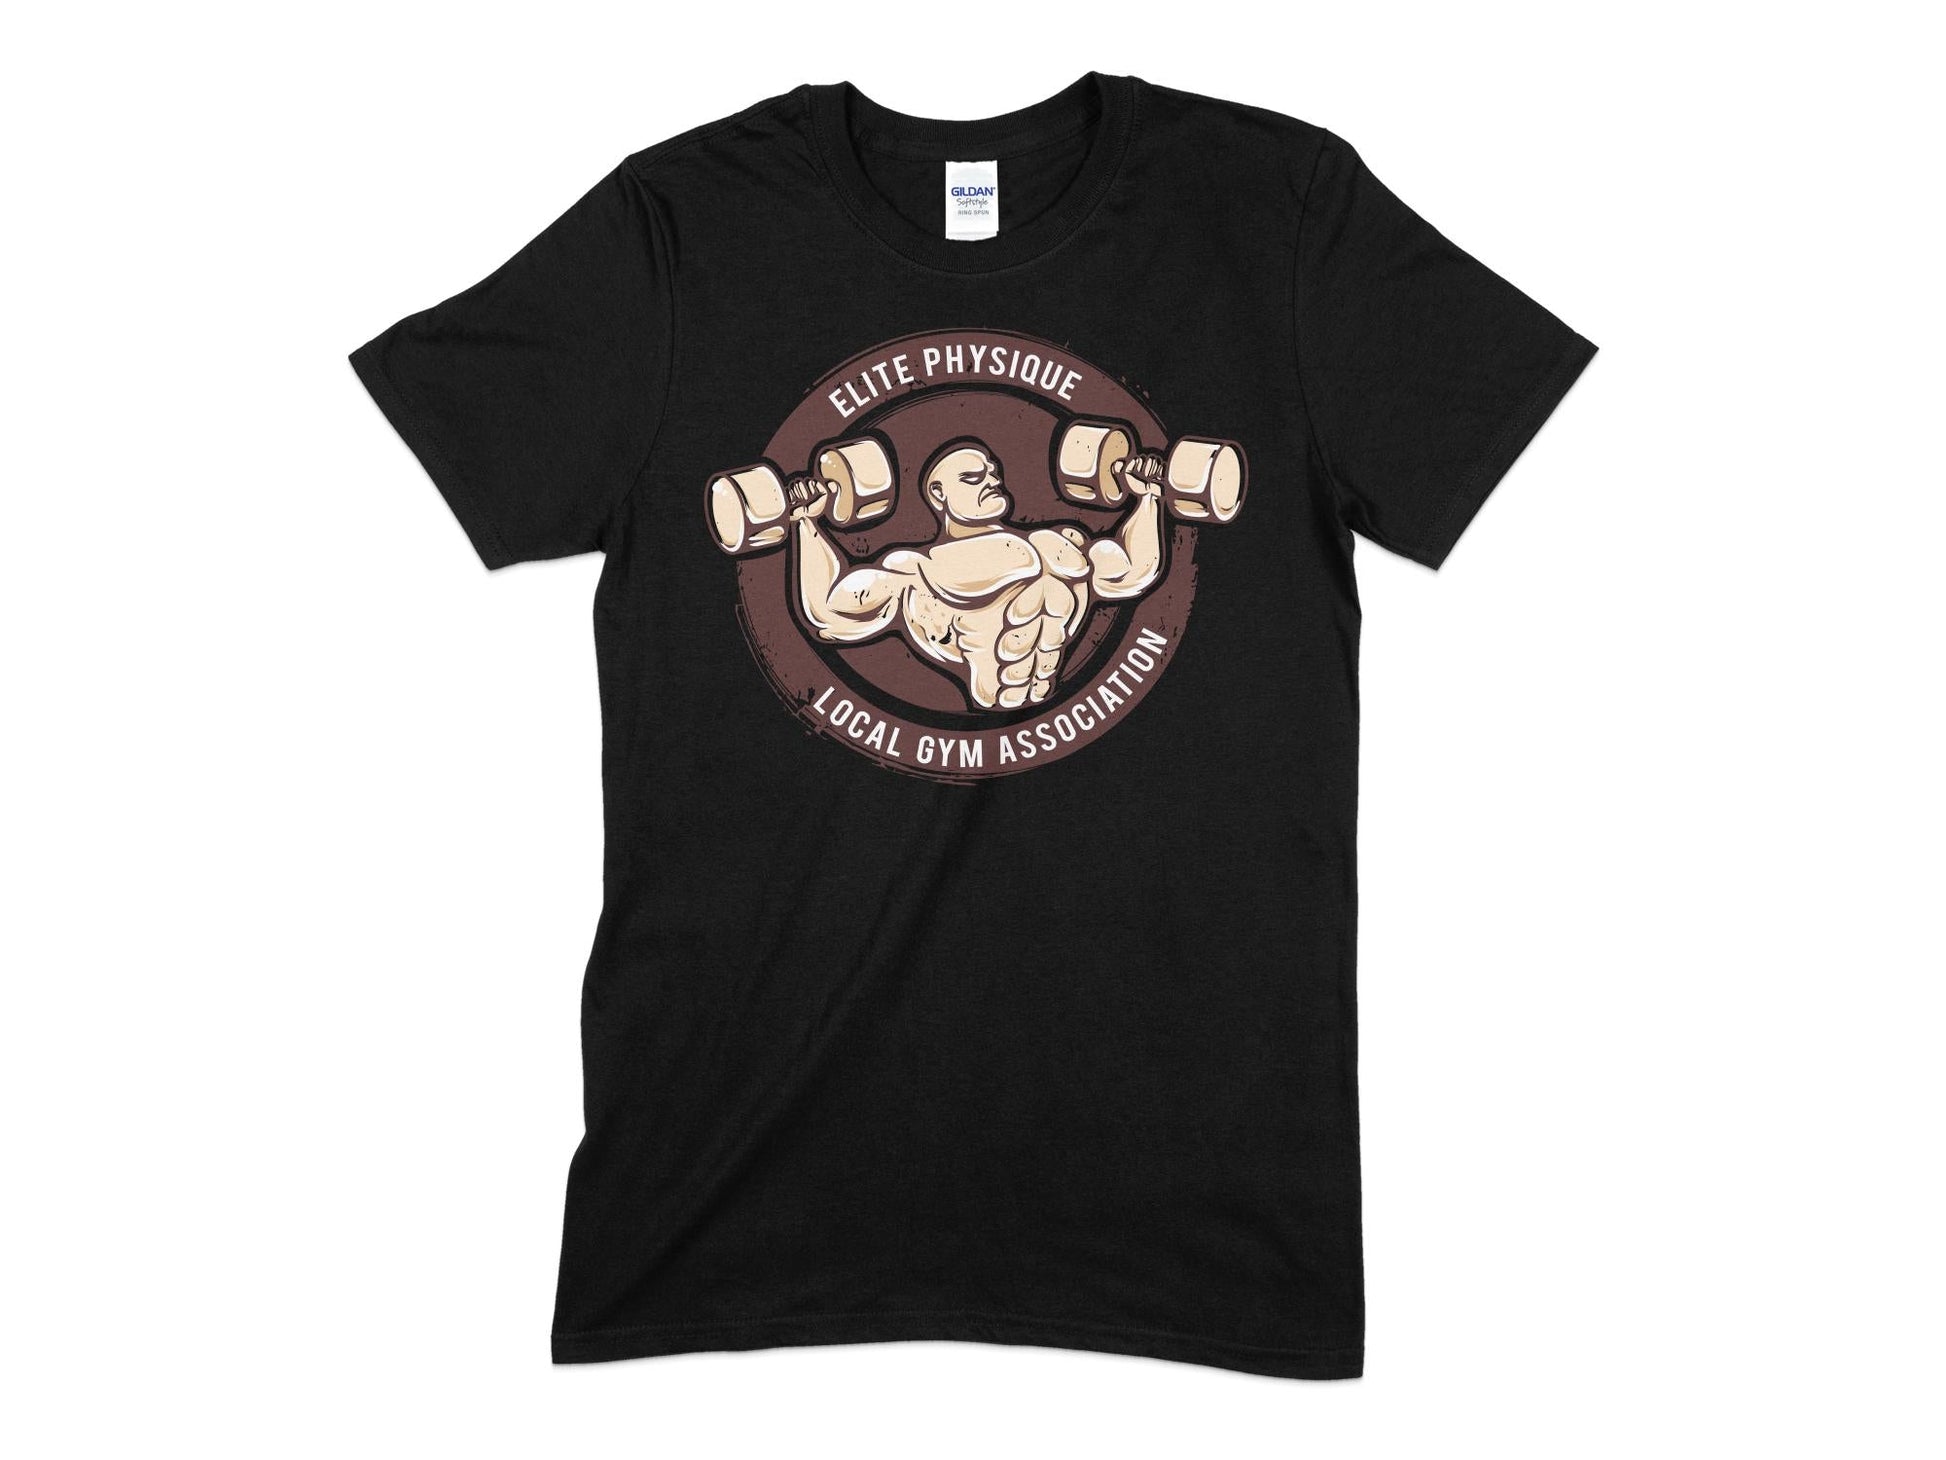 Elite physique local gym association Men's bodybuilding t-shirt - Premium t-shirt from MyDesigns - Just $19.95! Shop now at Lees Krazy Teez